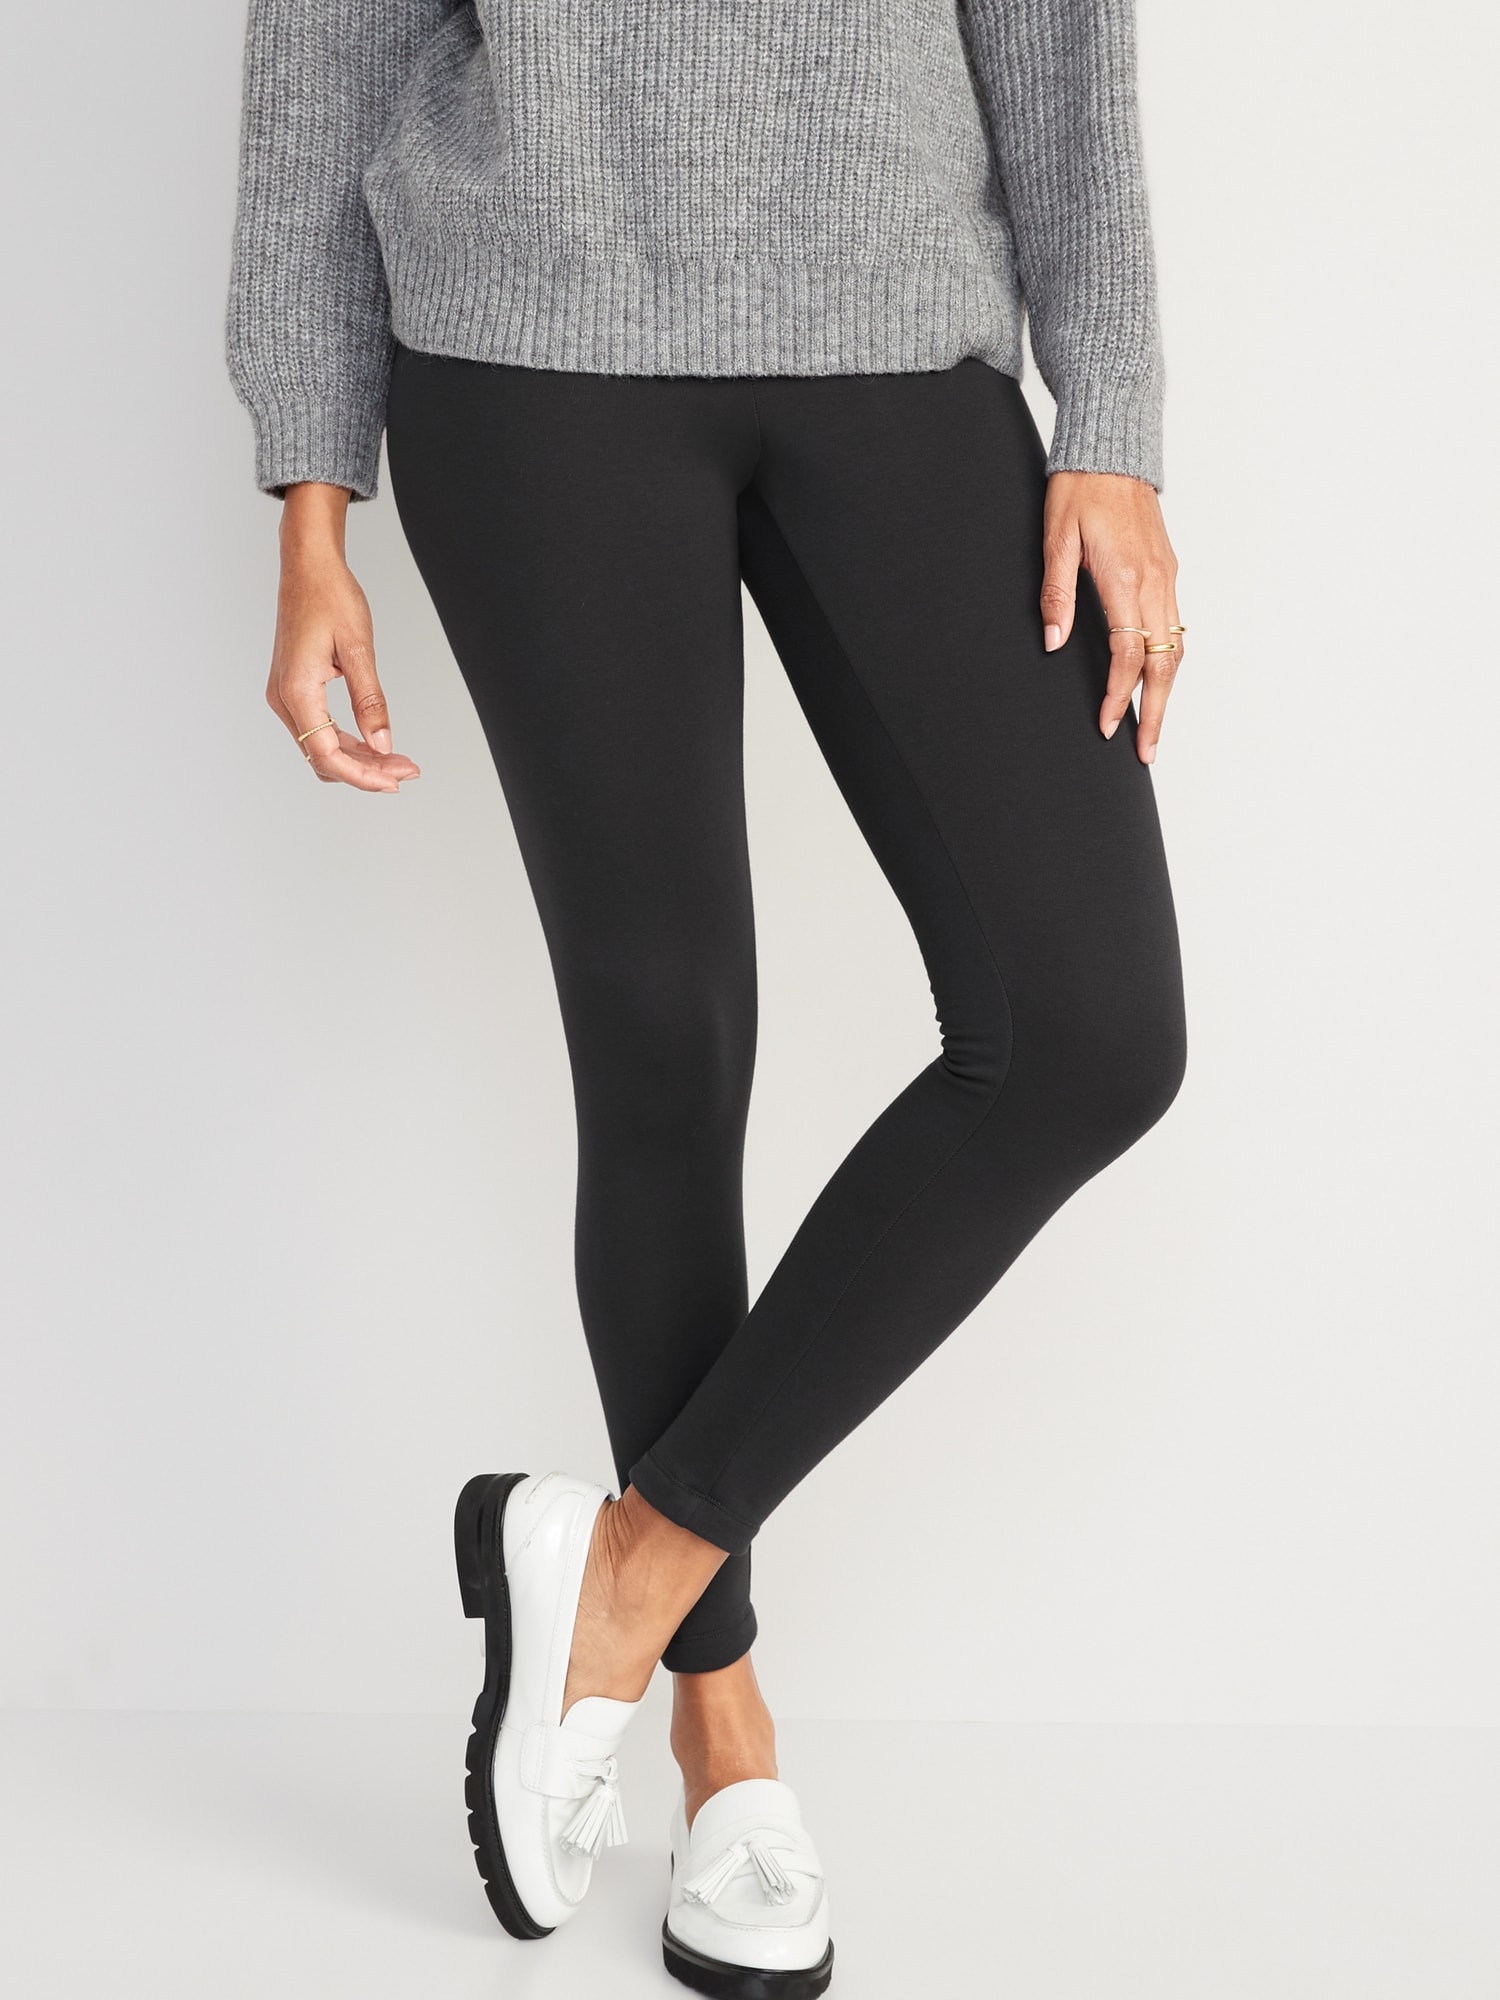 13 Best Fleece Lined Leggings To Wear This Winter Glamour UK ...